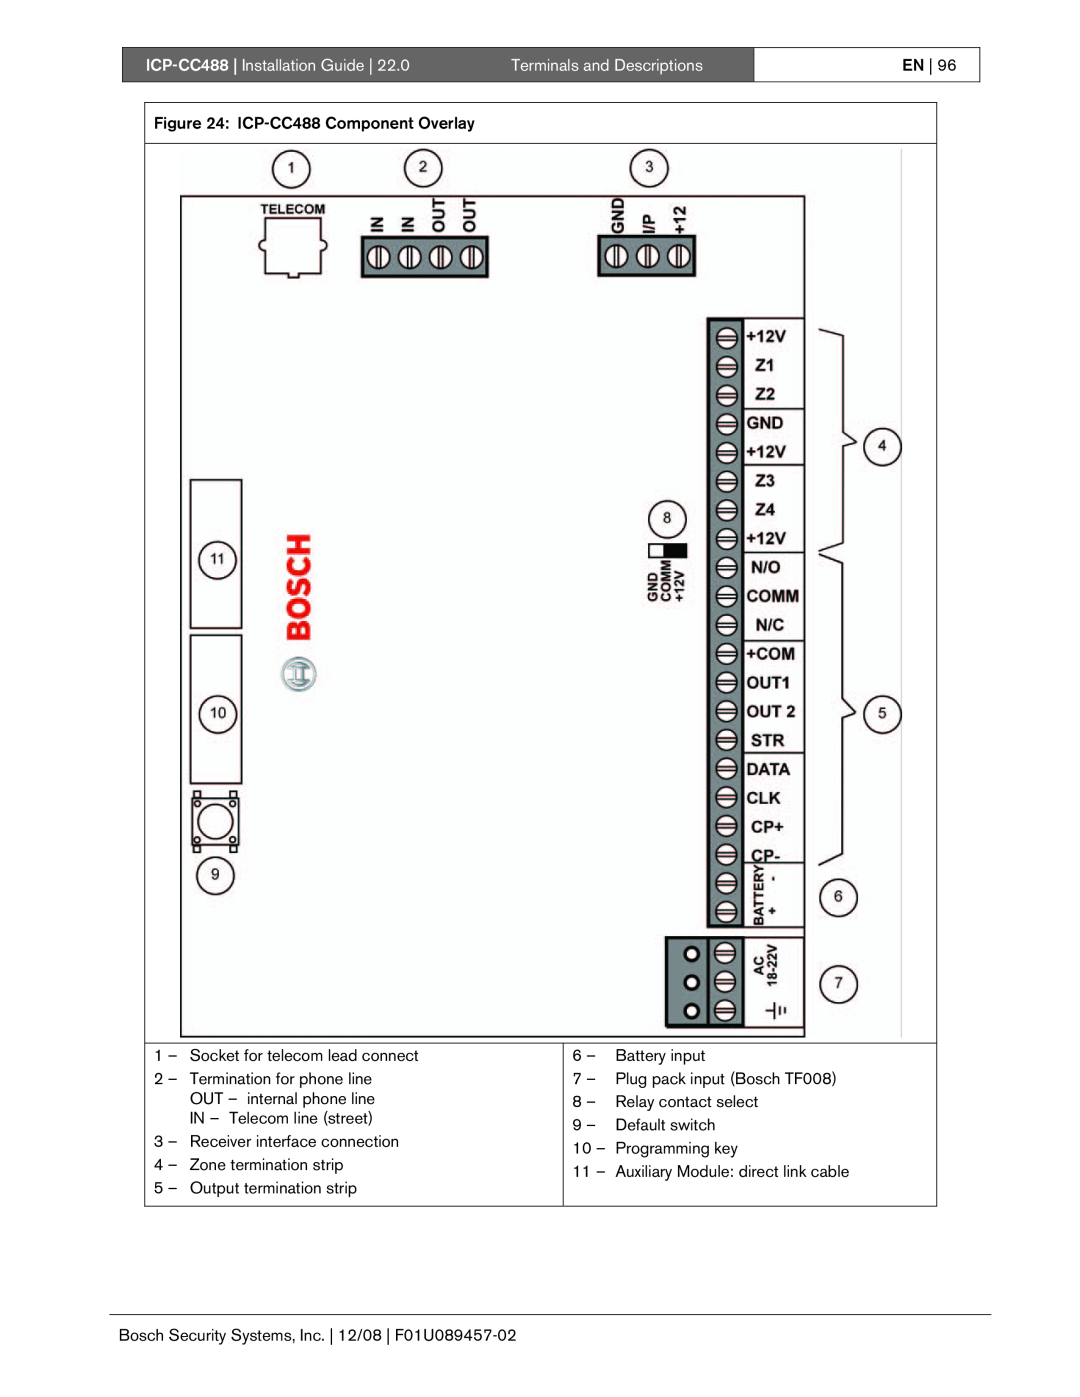 Bosch Appliances manual ICP-CC488| Installation Guide, Terminals and Descriptions, En 